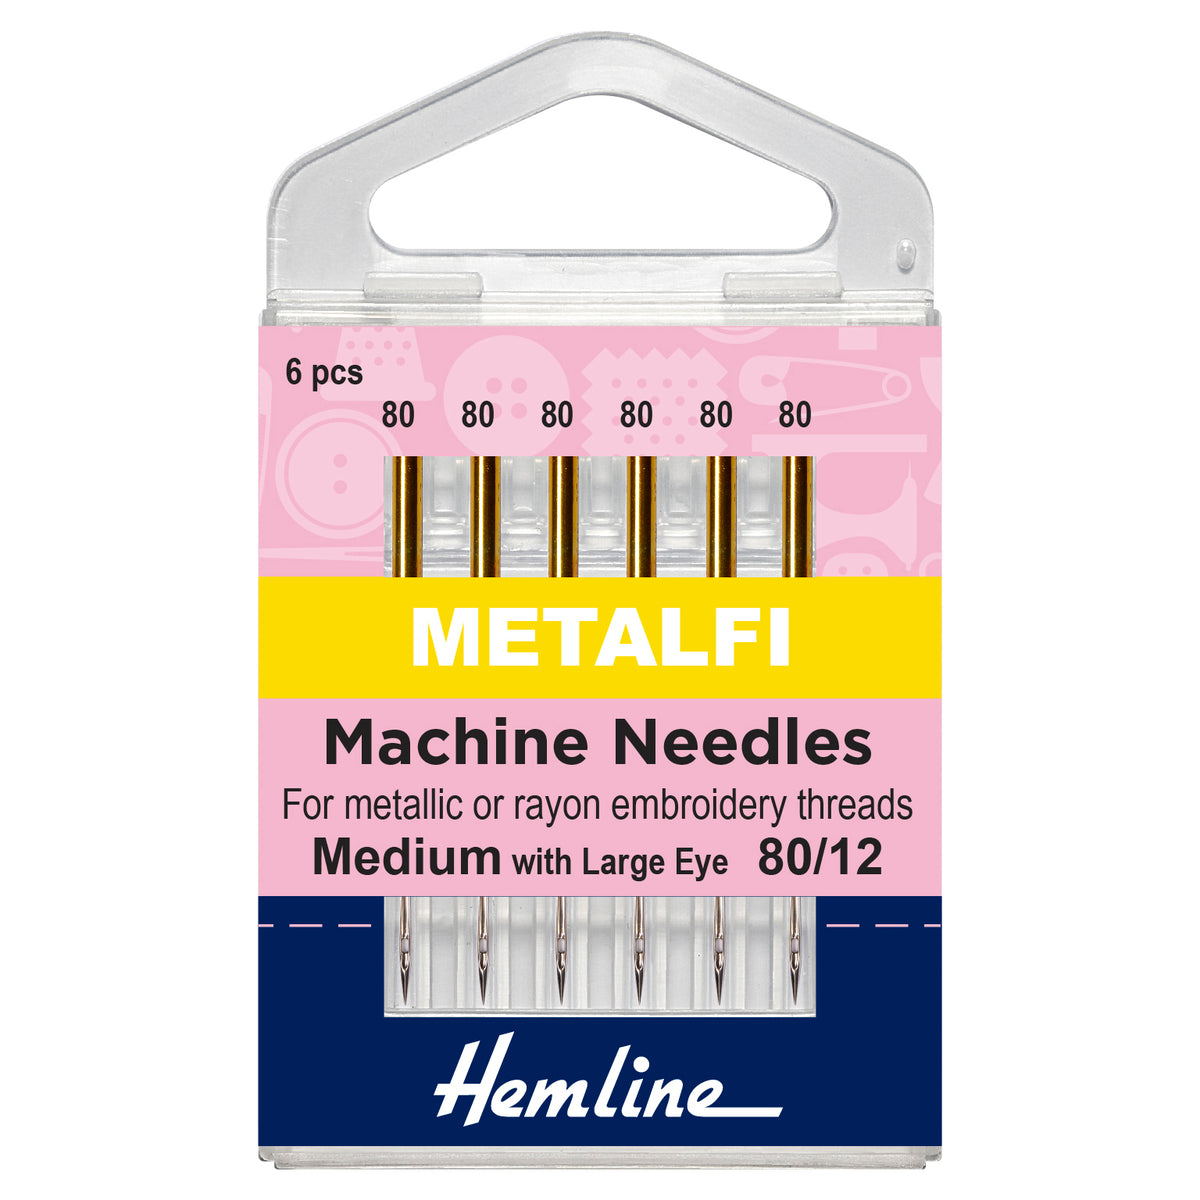 Sewing Machine Needles - METALLIC